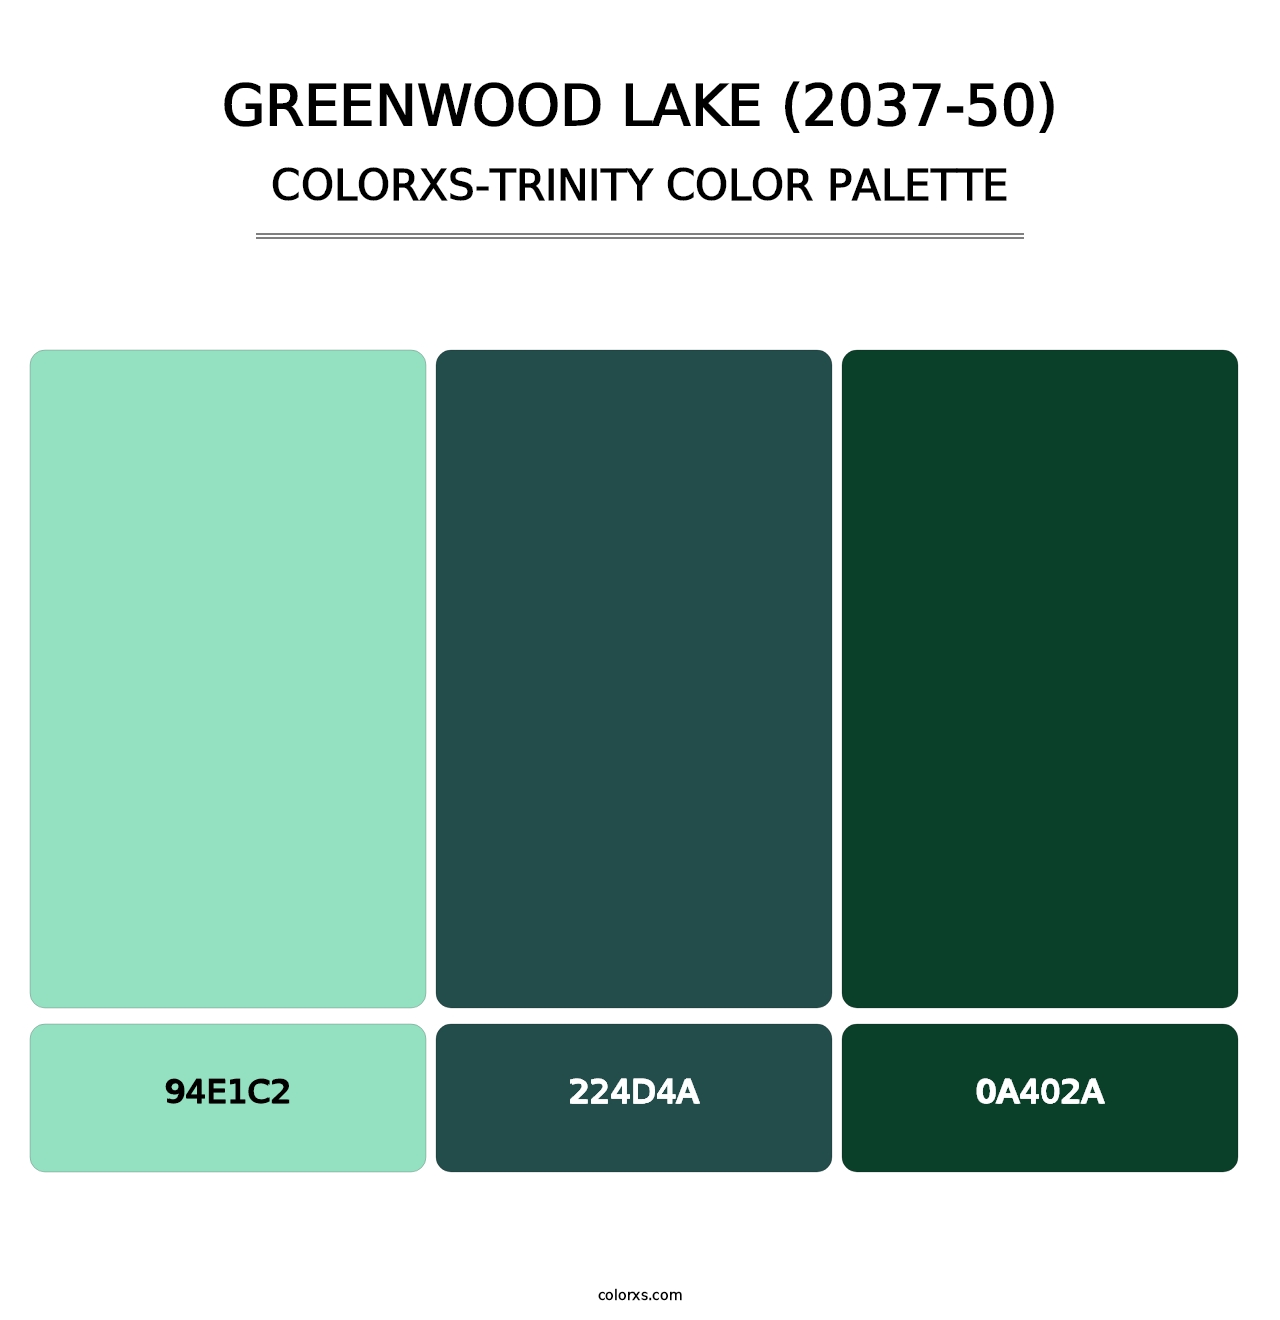 Greenwood Lake (2037-50) - Colorxs Trinity Palette